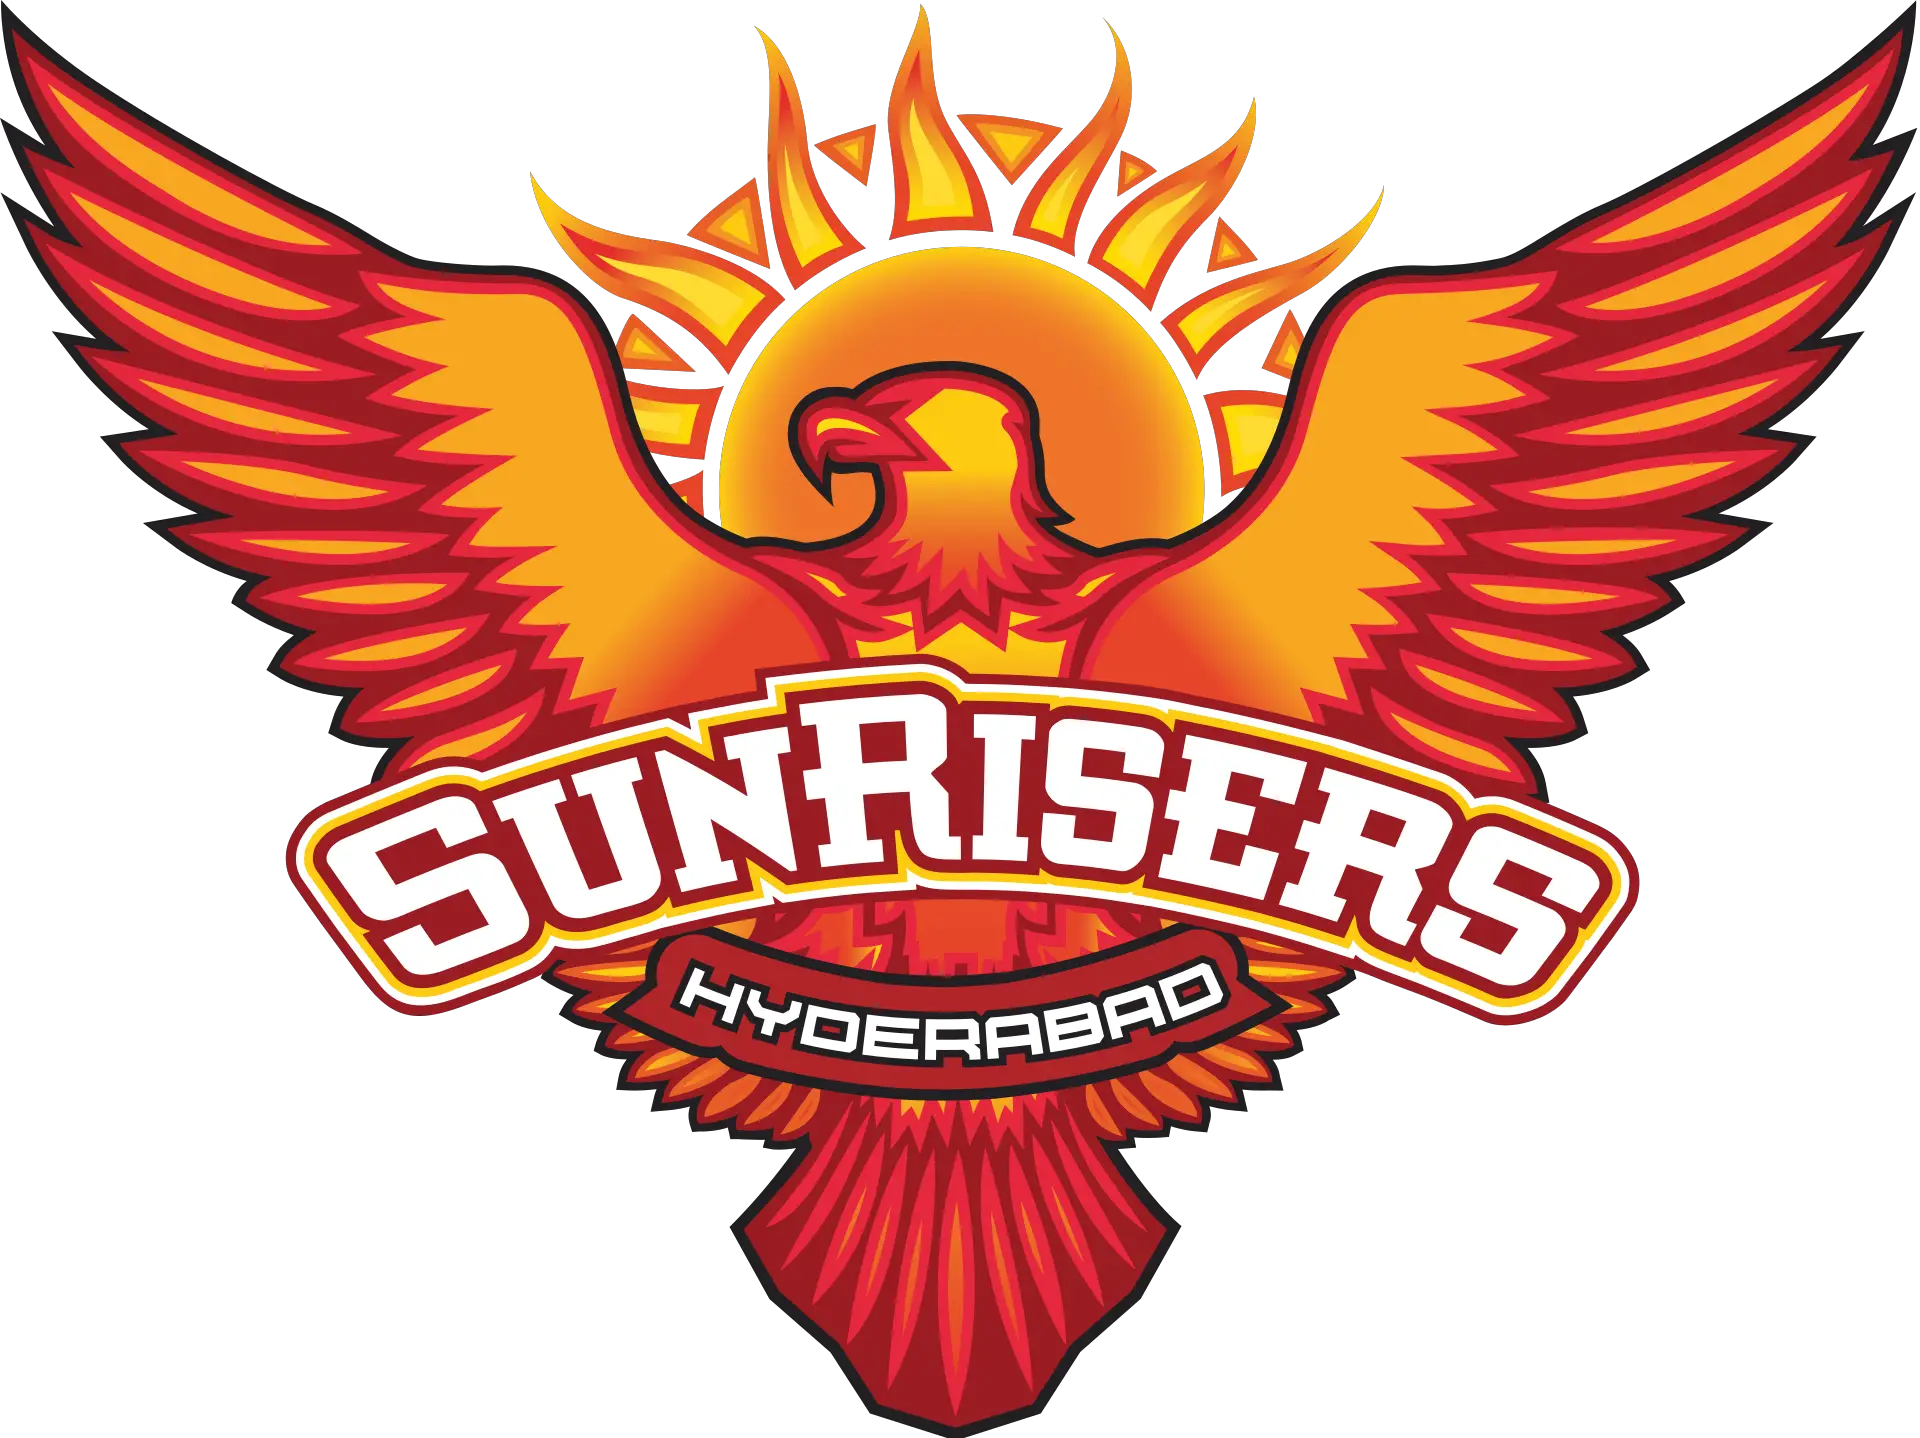 Sunrisers Hyderabad Logo